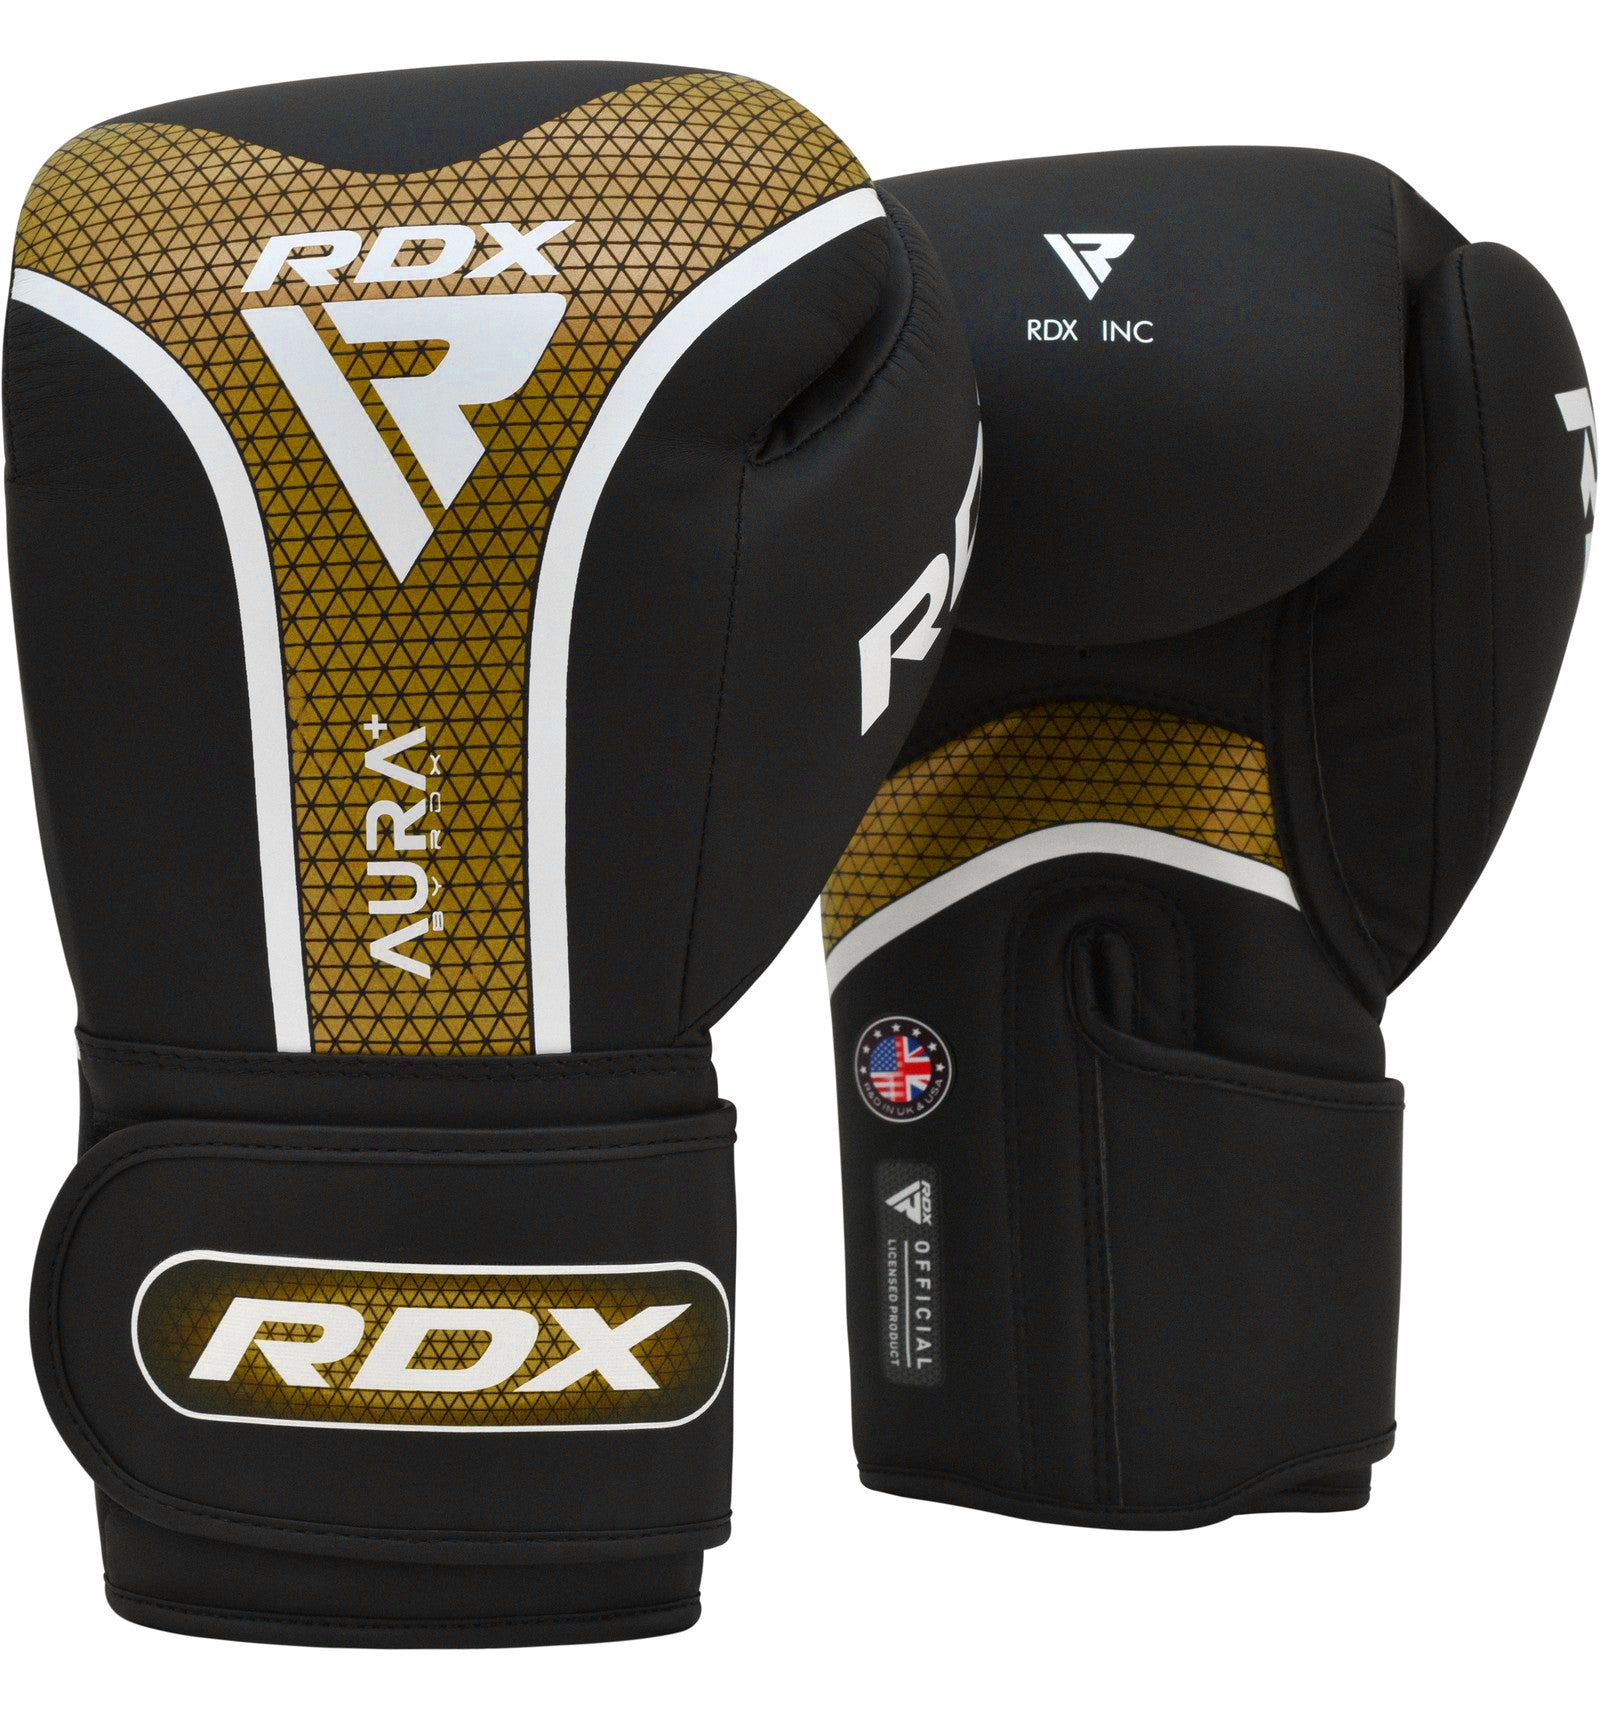 RDX T17 Aura Nova Tech Boxing Sparring Gloves - Golden - 12oz - Shock Absorbing Foam, Moisture Wicking for Heavy Punching Bag Training, Kickboxing, Muay Thai, Sparring - Pro-Distributing